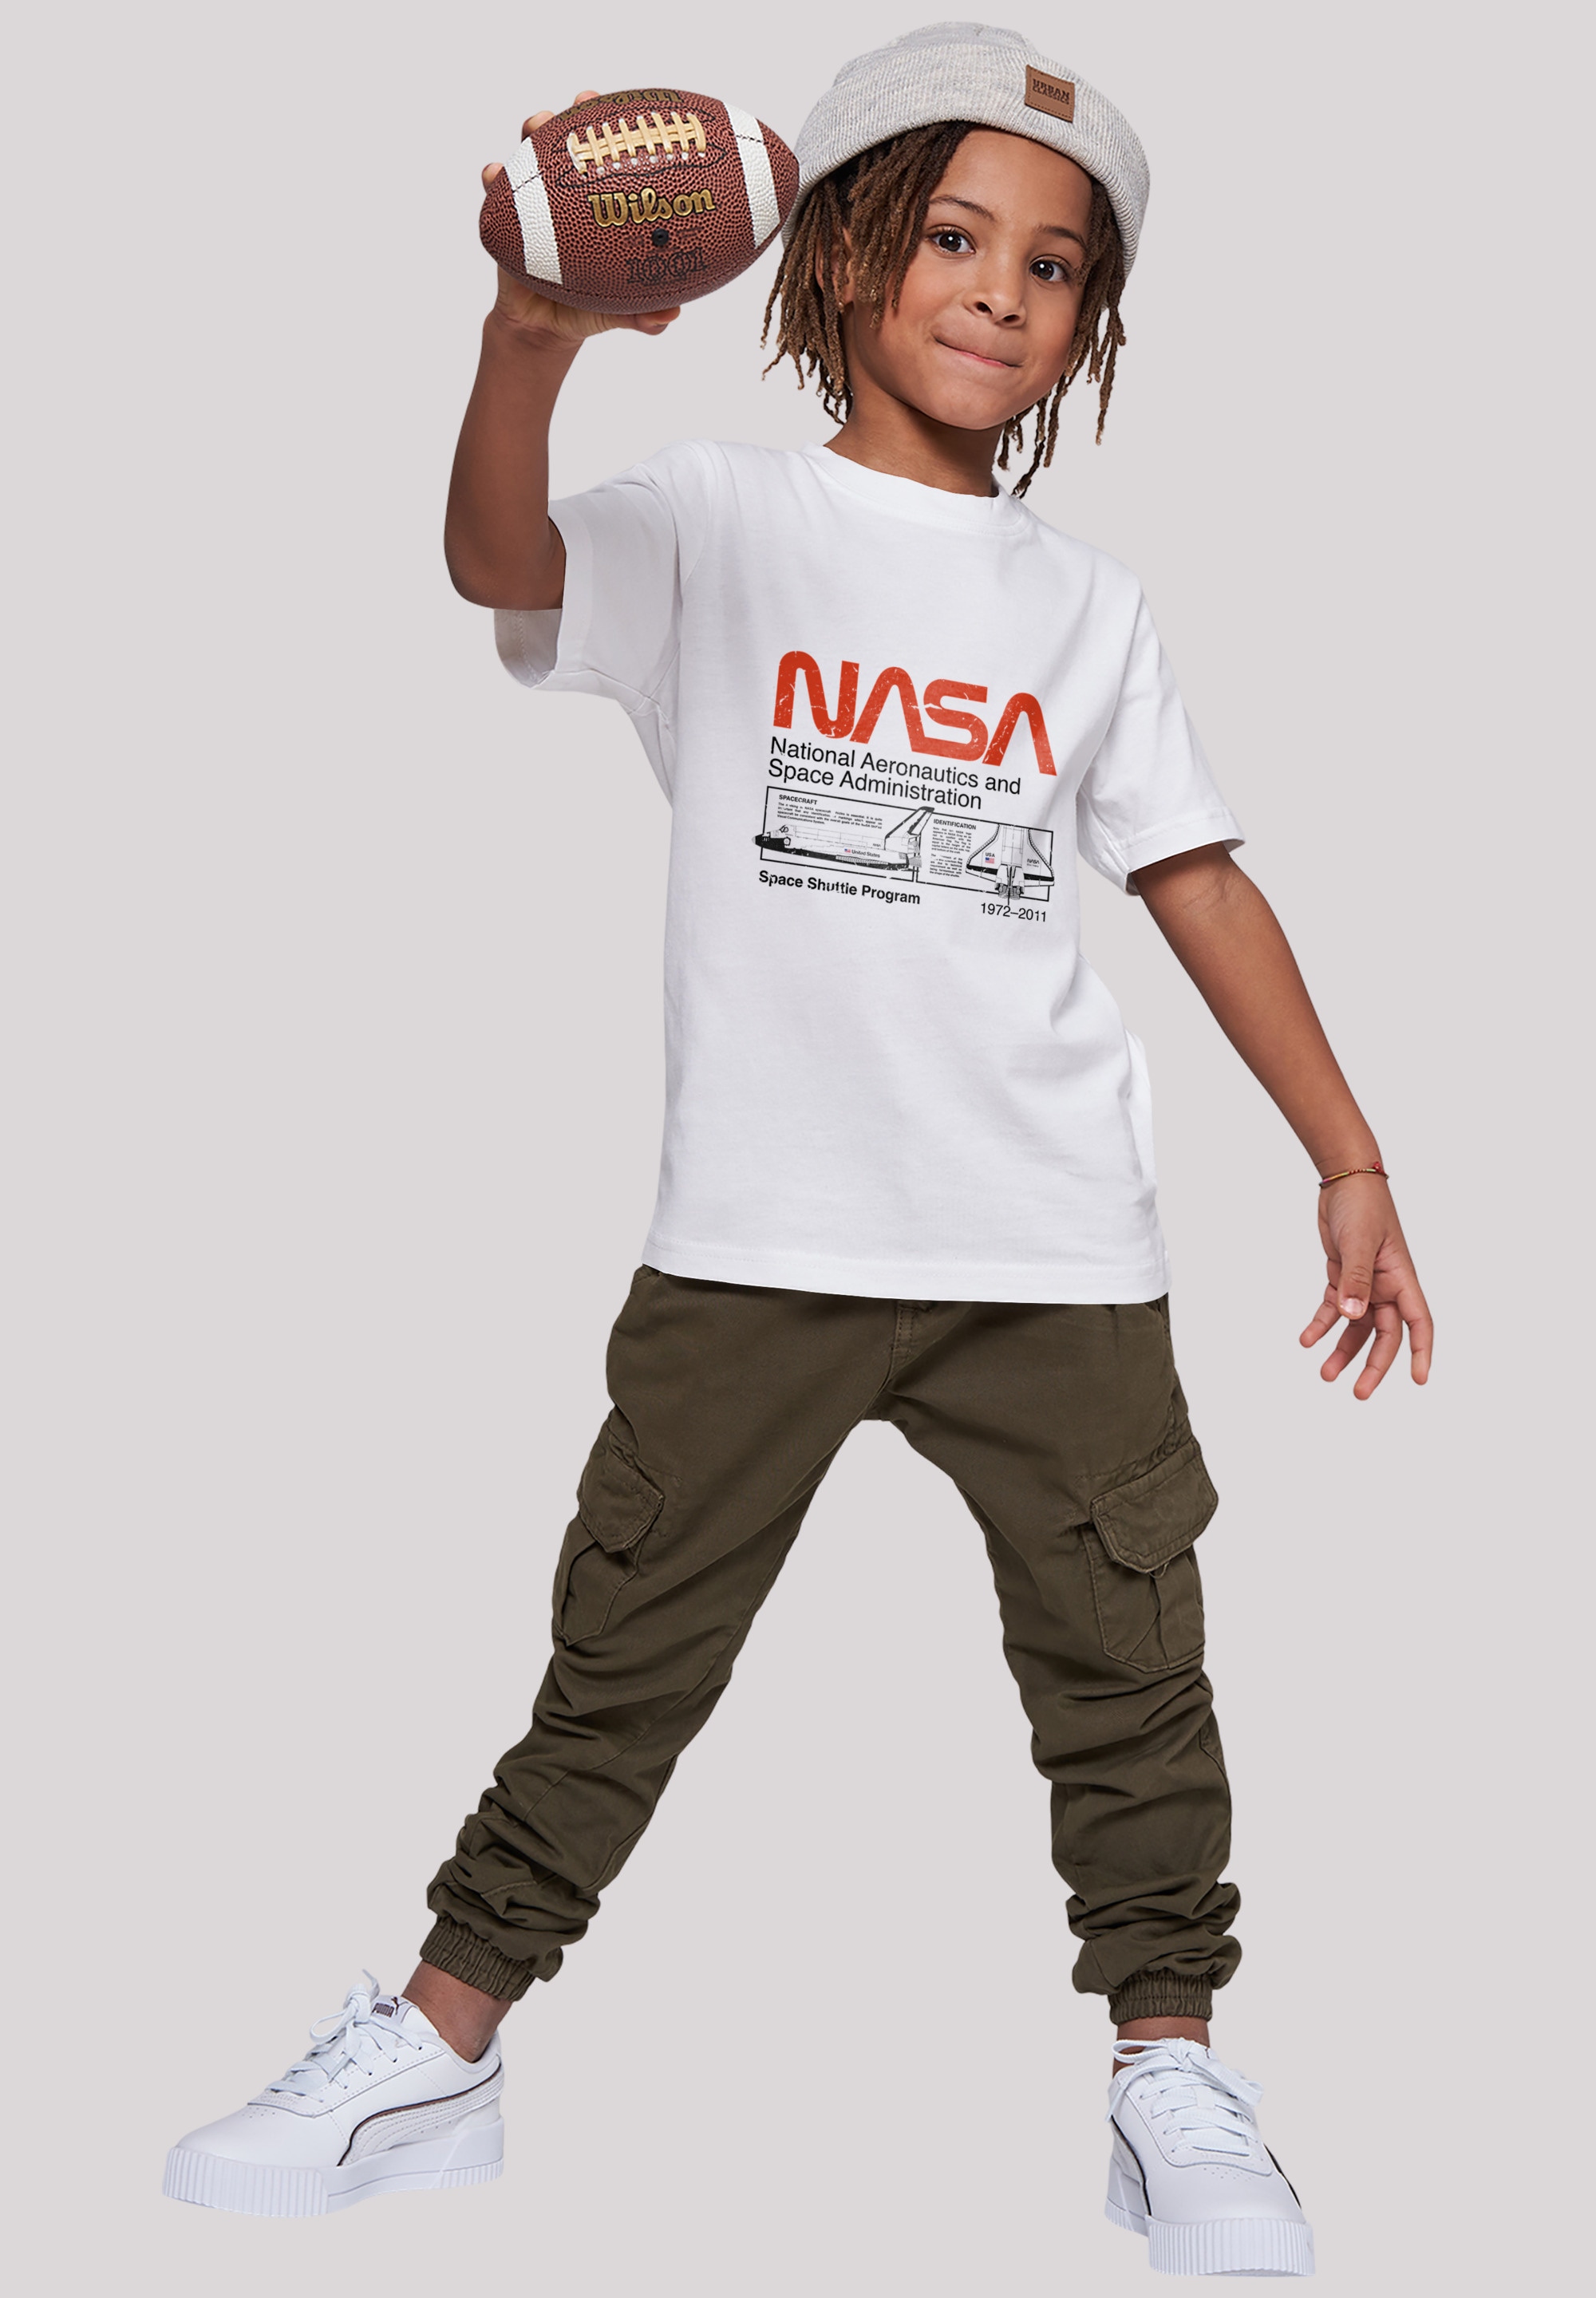 Black Friday F4NT4STIC T-Shirt Shuttle Unisex »NASA BAUR Classic Merch,Jungen,Mädchen,Bedruckt Kinder,Premium | White«, Space